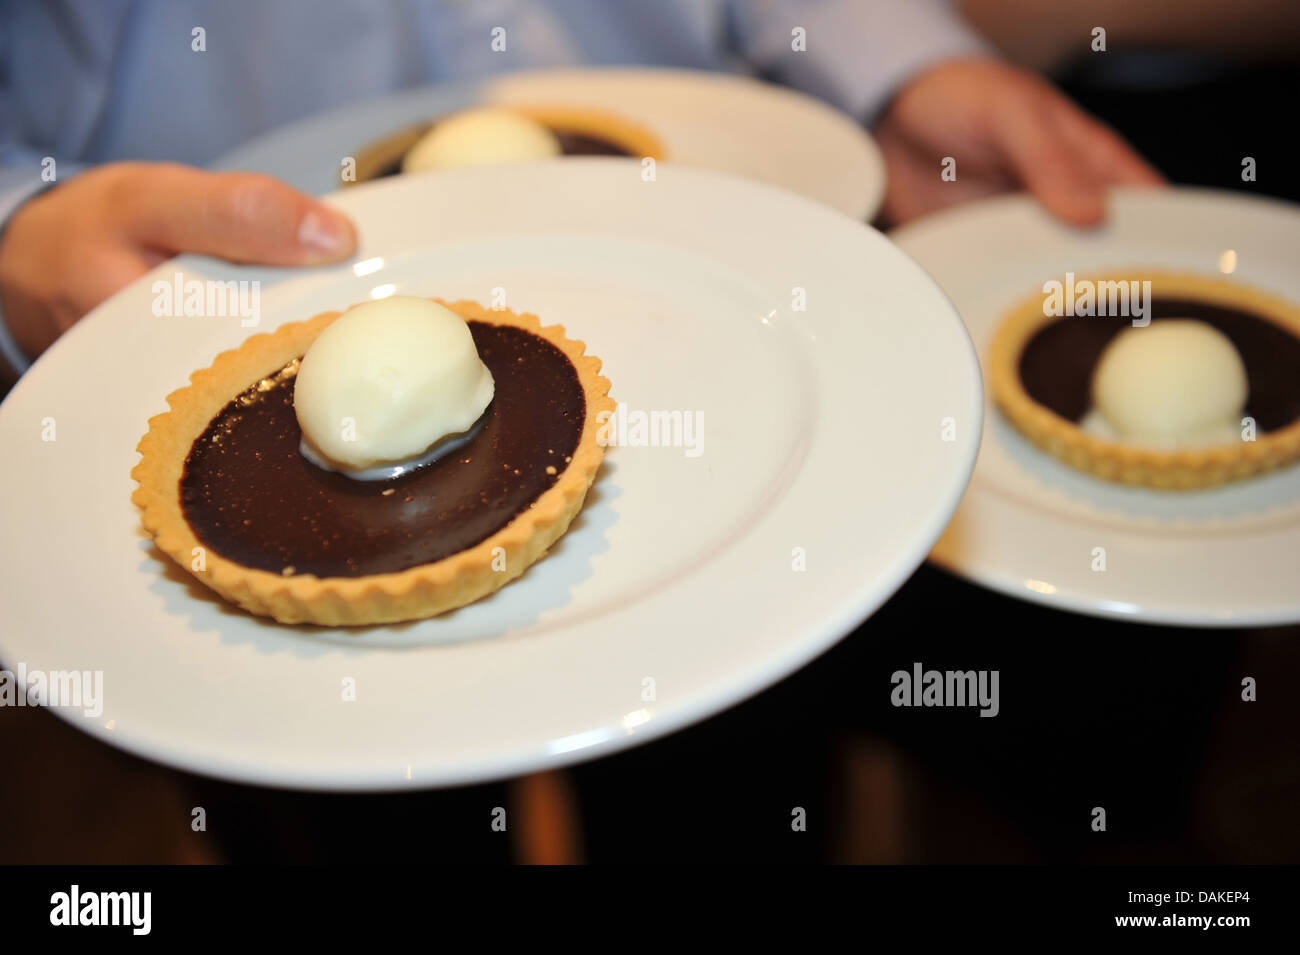 Chocolate Cream tart served on plates at a wedding Stock Photo